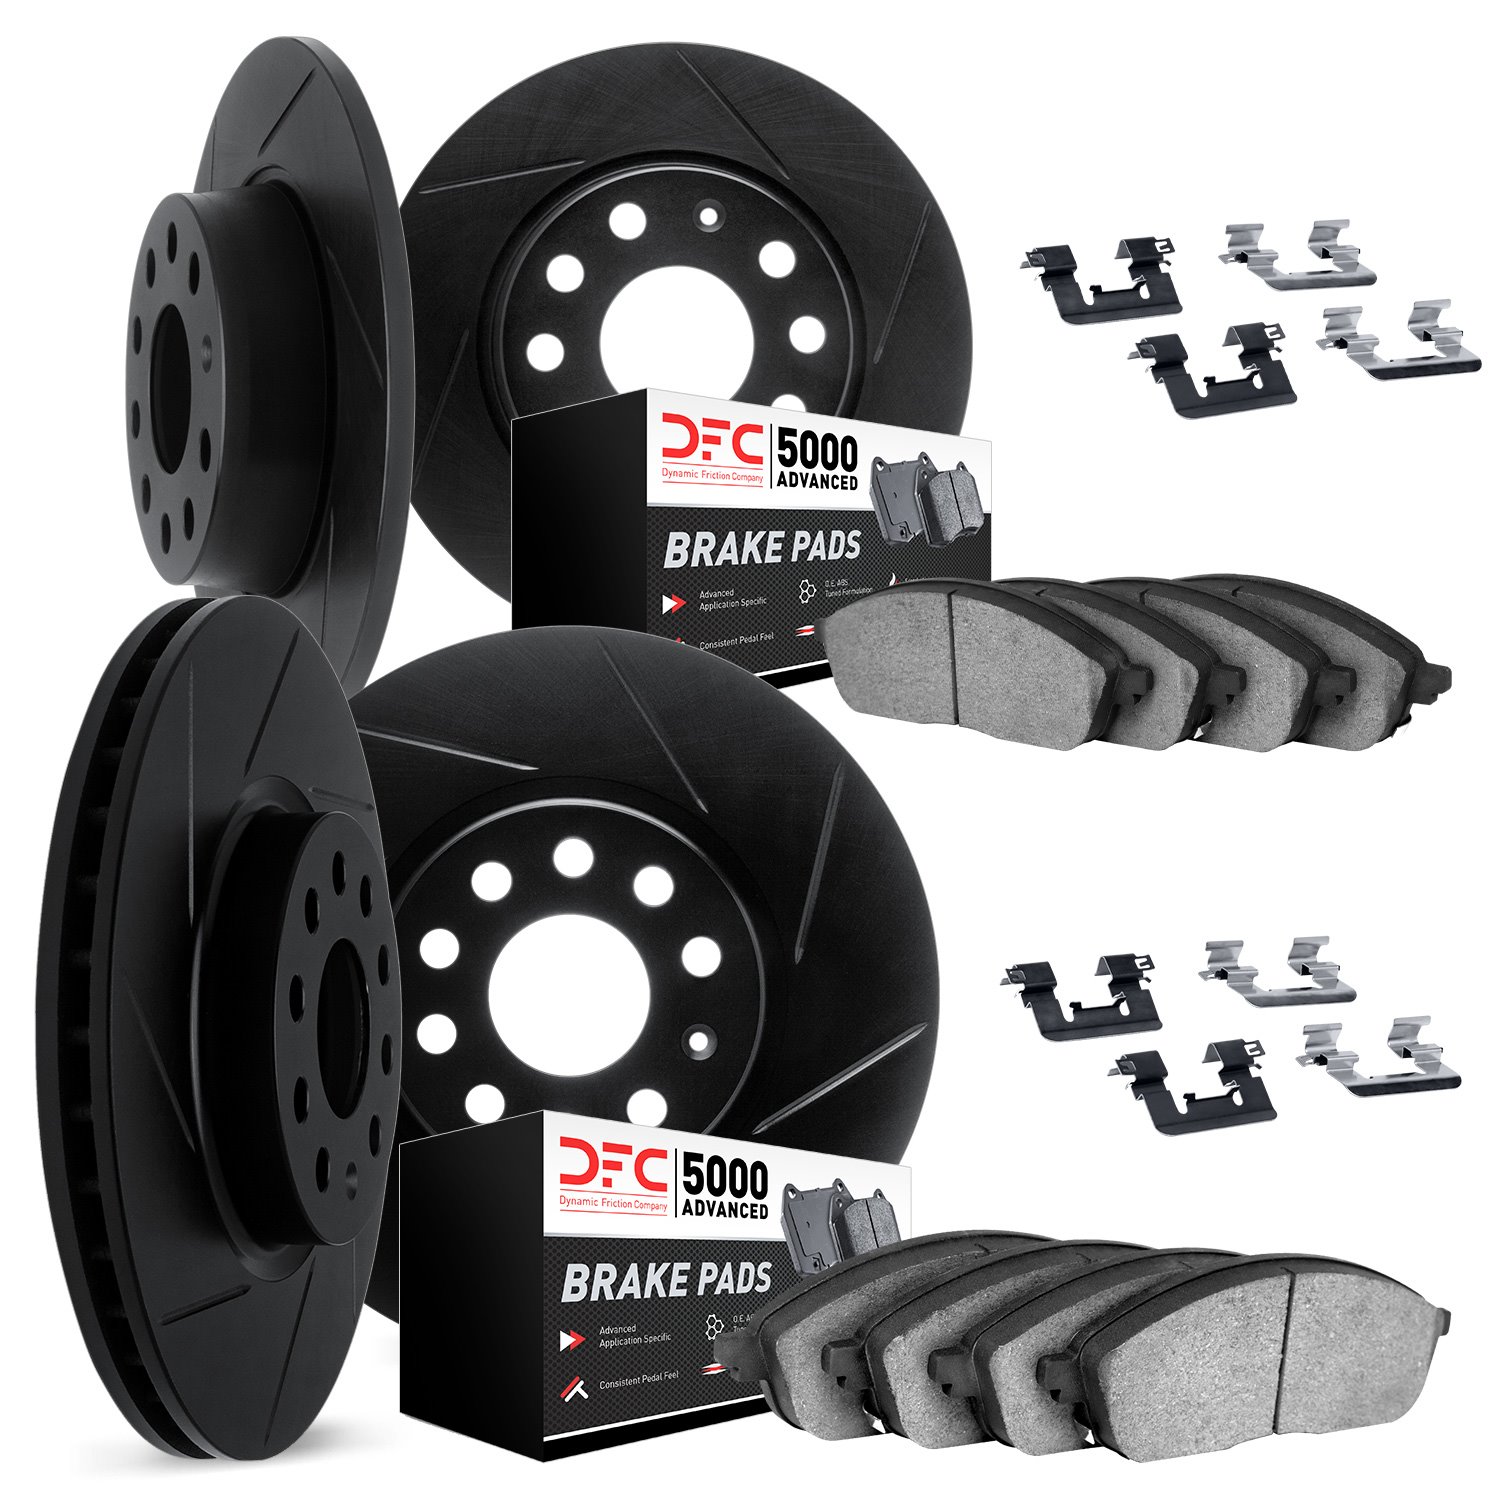 3514-39028 Slotted Brake Rotors w/5000 Advanced Brake Pads Kit & Hardware [Black], Fits Select Mopar, Position: Front and Rear